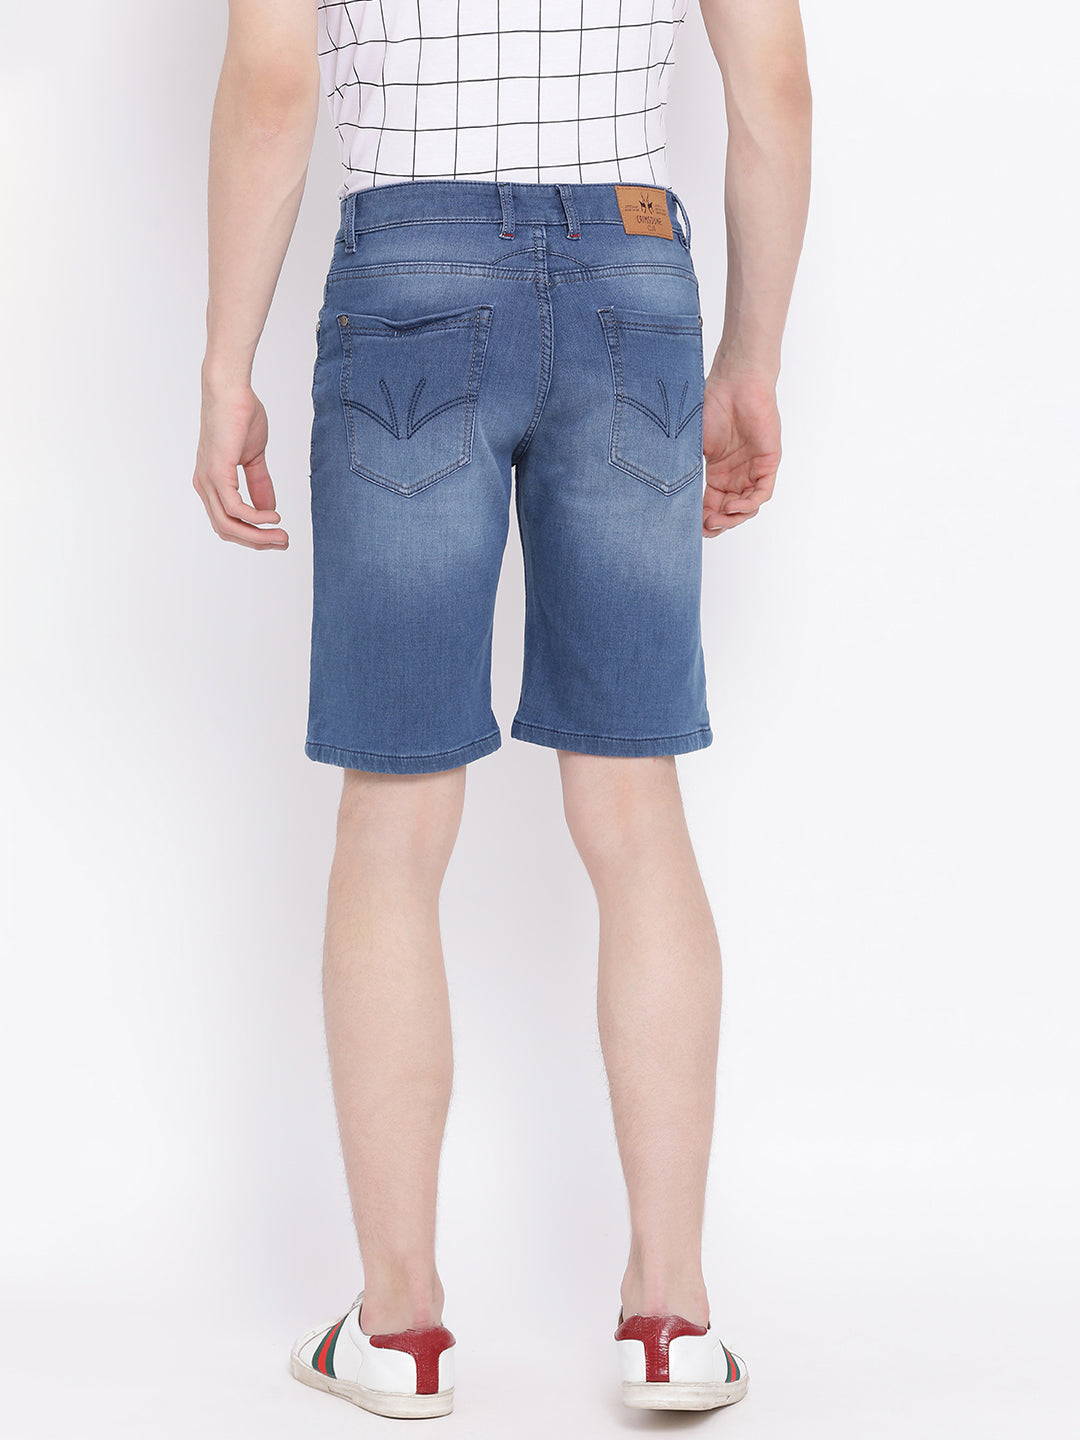 Blue shorts - Men Shorts